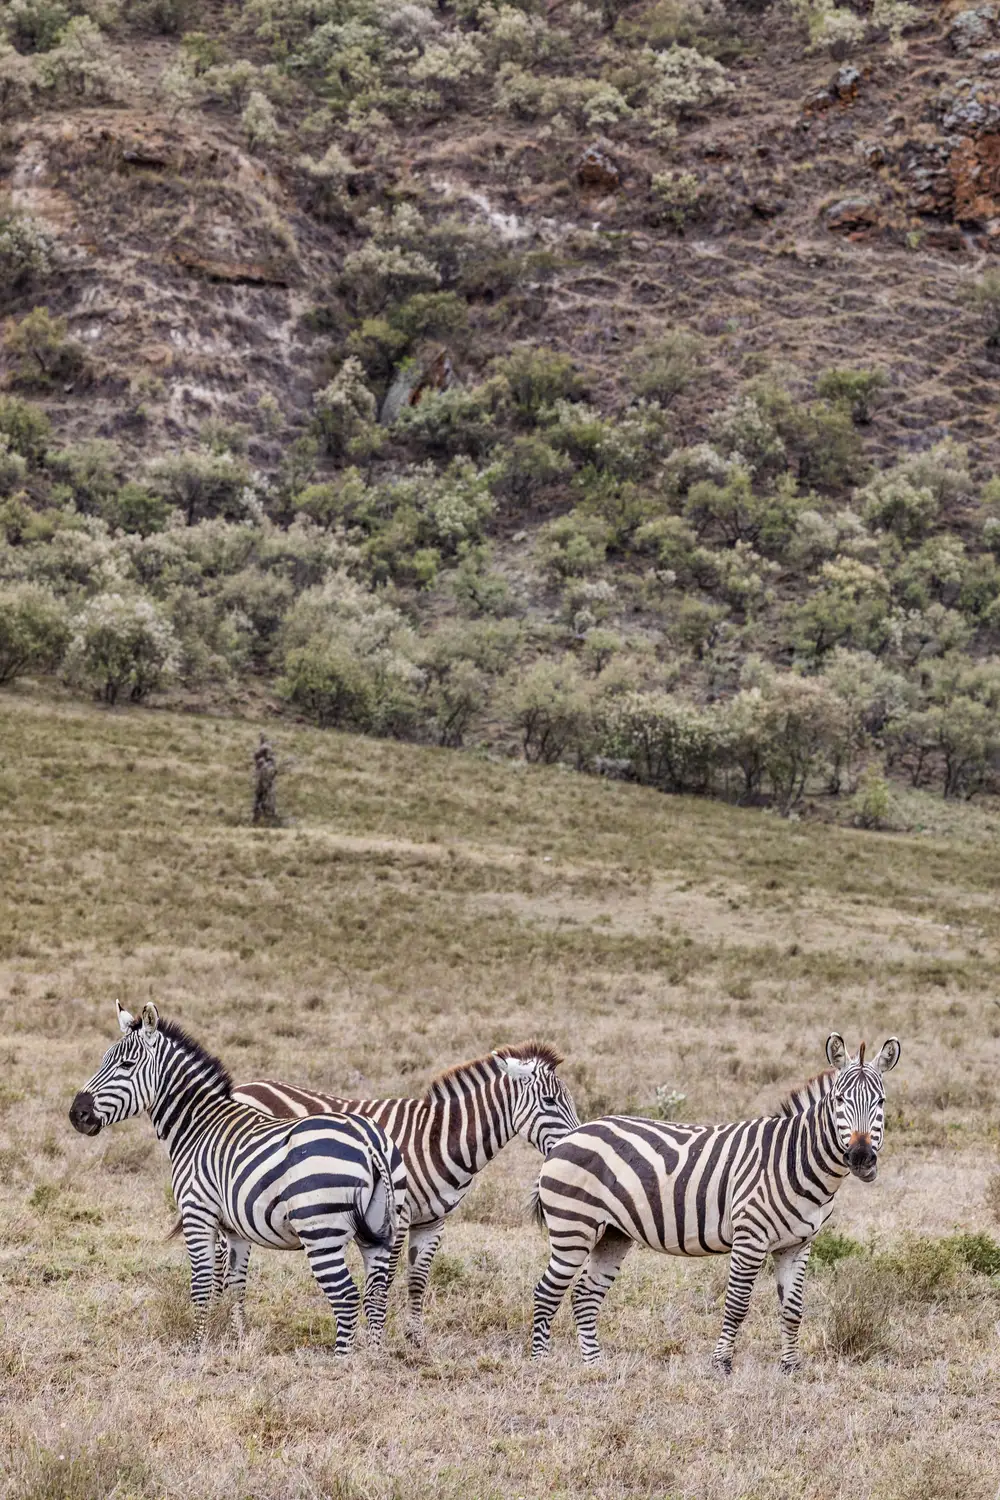 Three Zebras in a mountainous green landscape